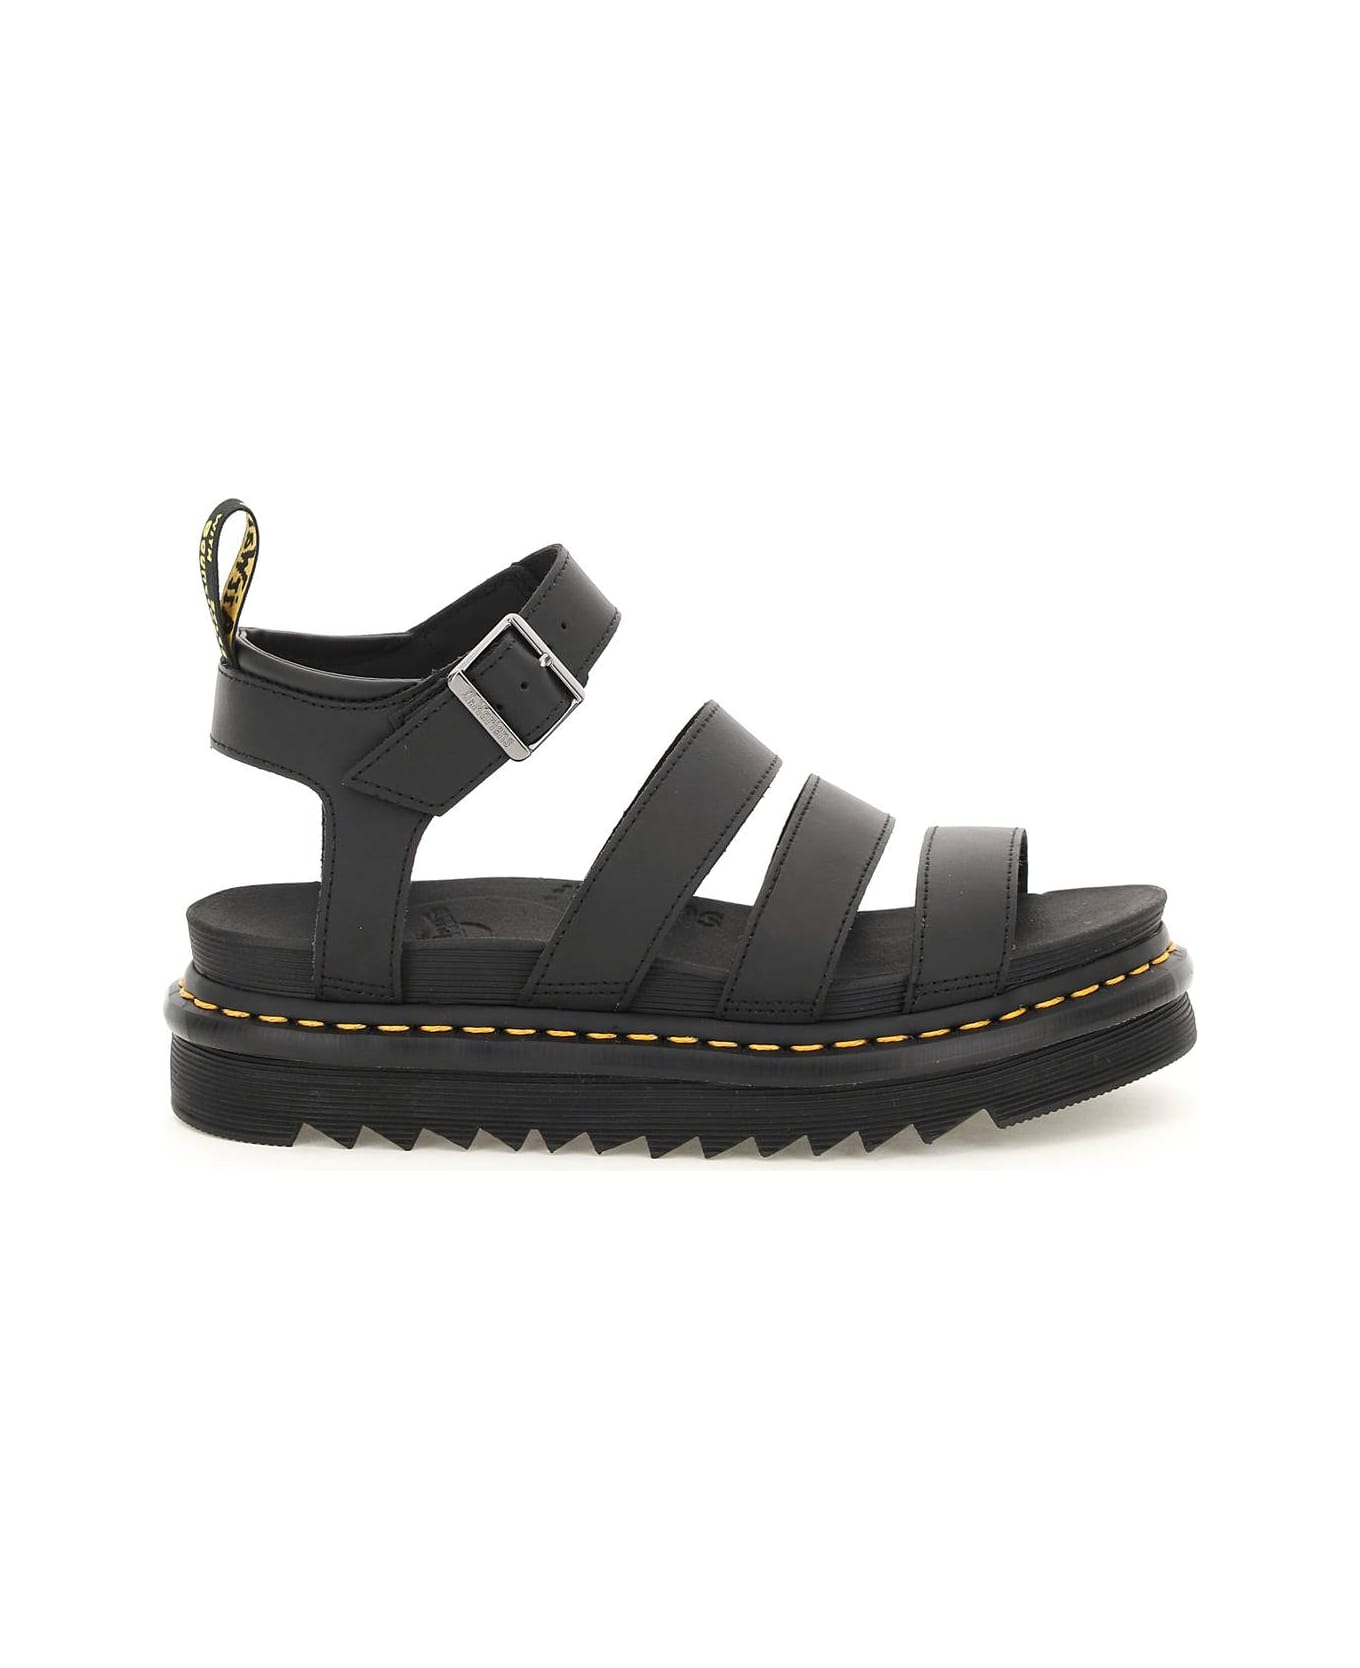 Dr. Martens Blaire Leather Sandals With Straps - Black フラットシューズ